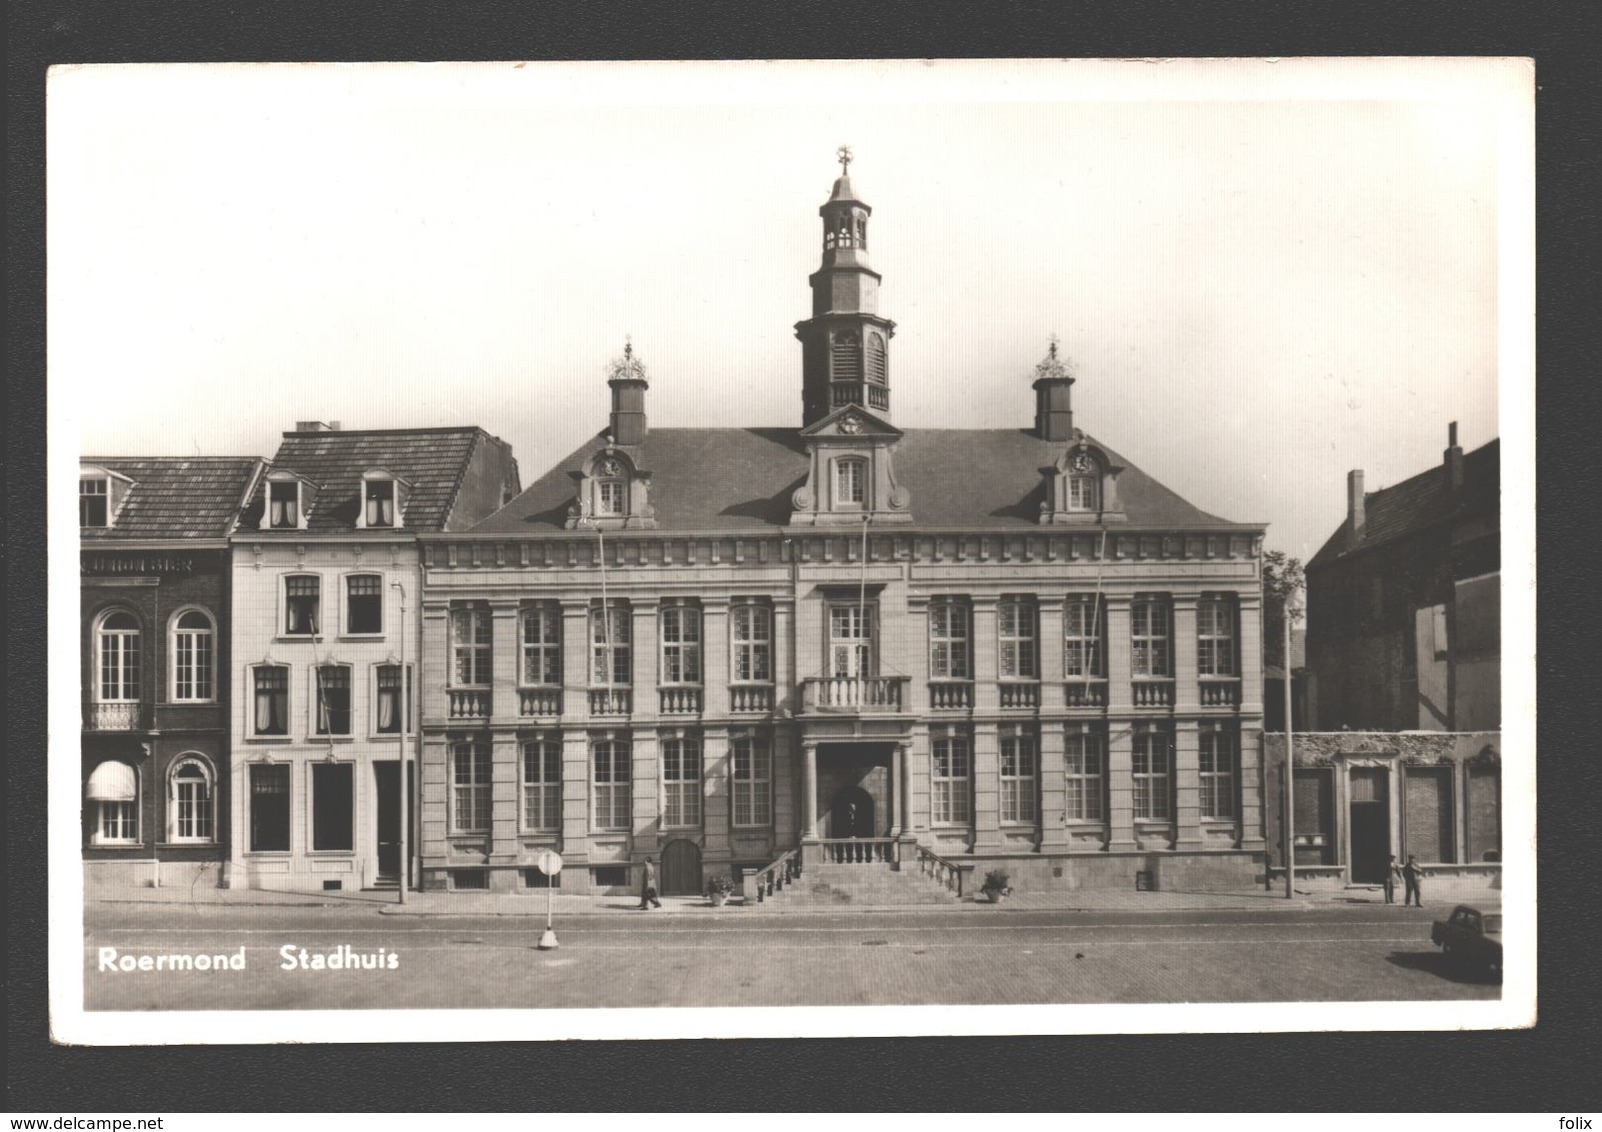 Roermond - Stadhuis - Roermond